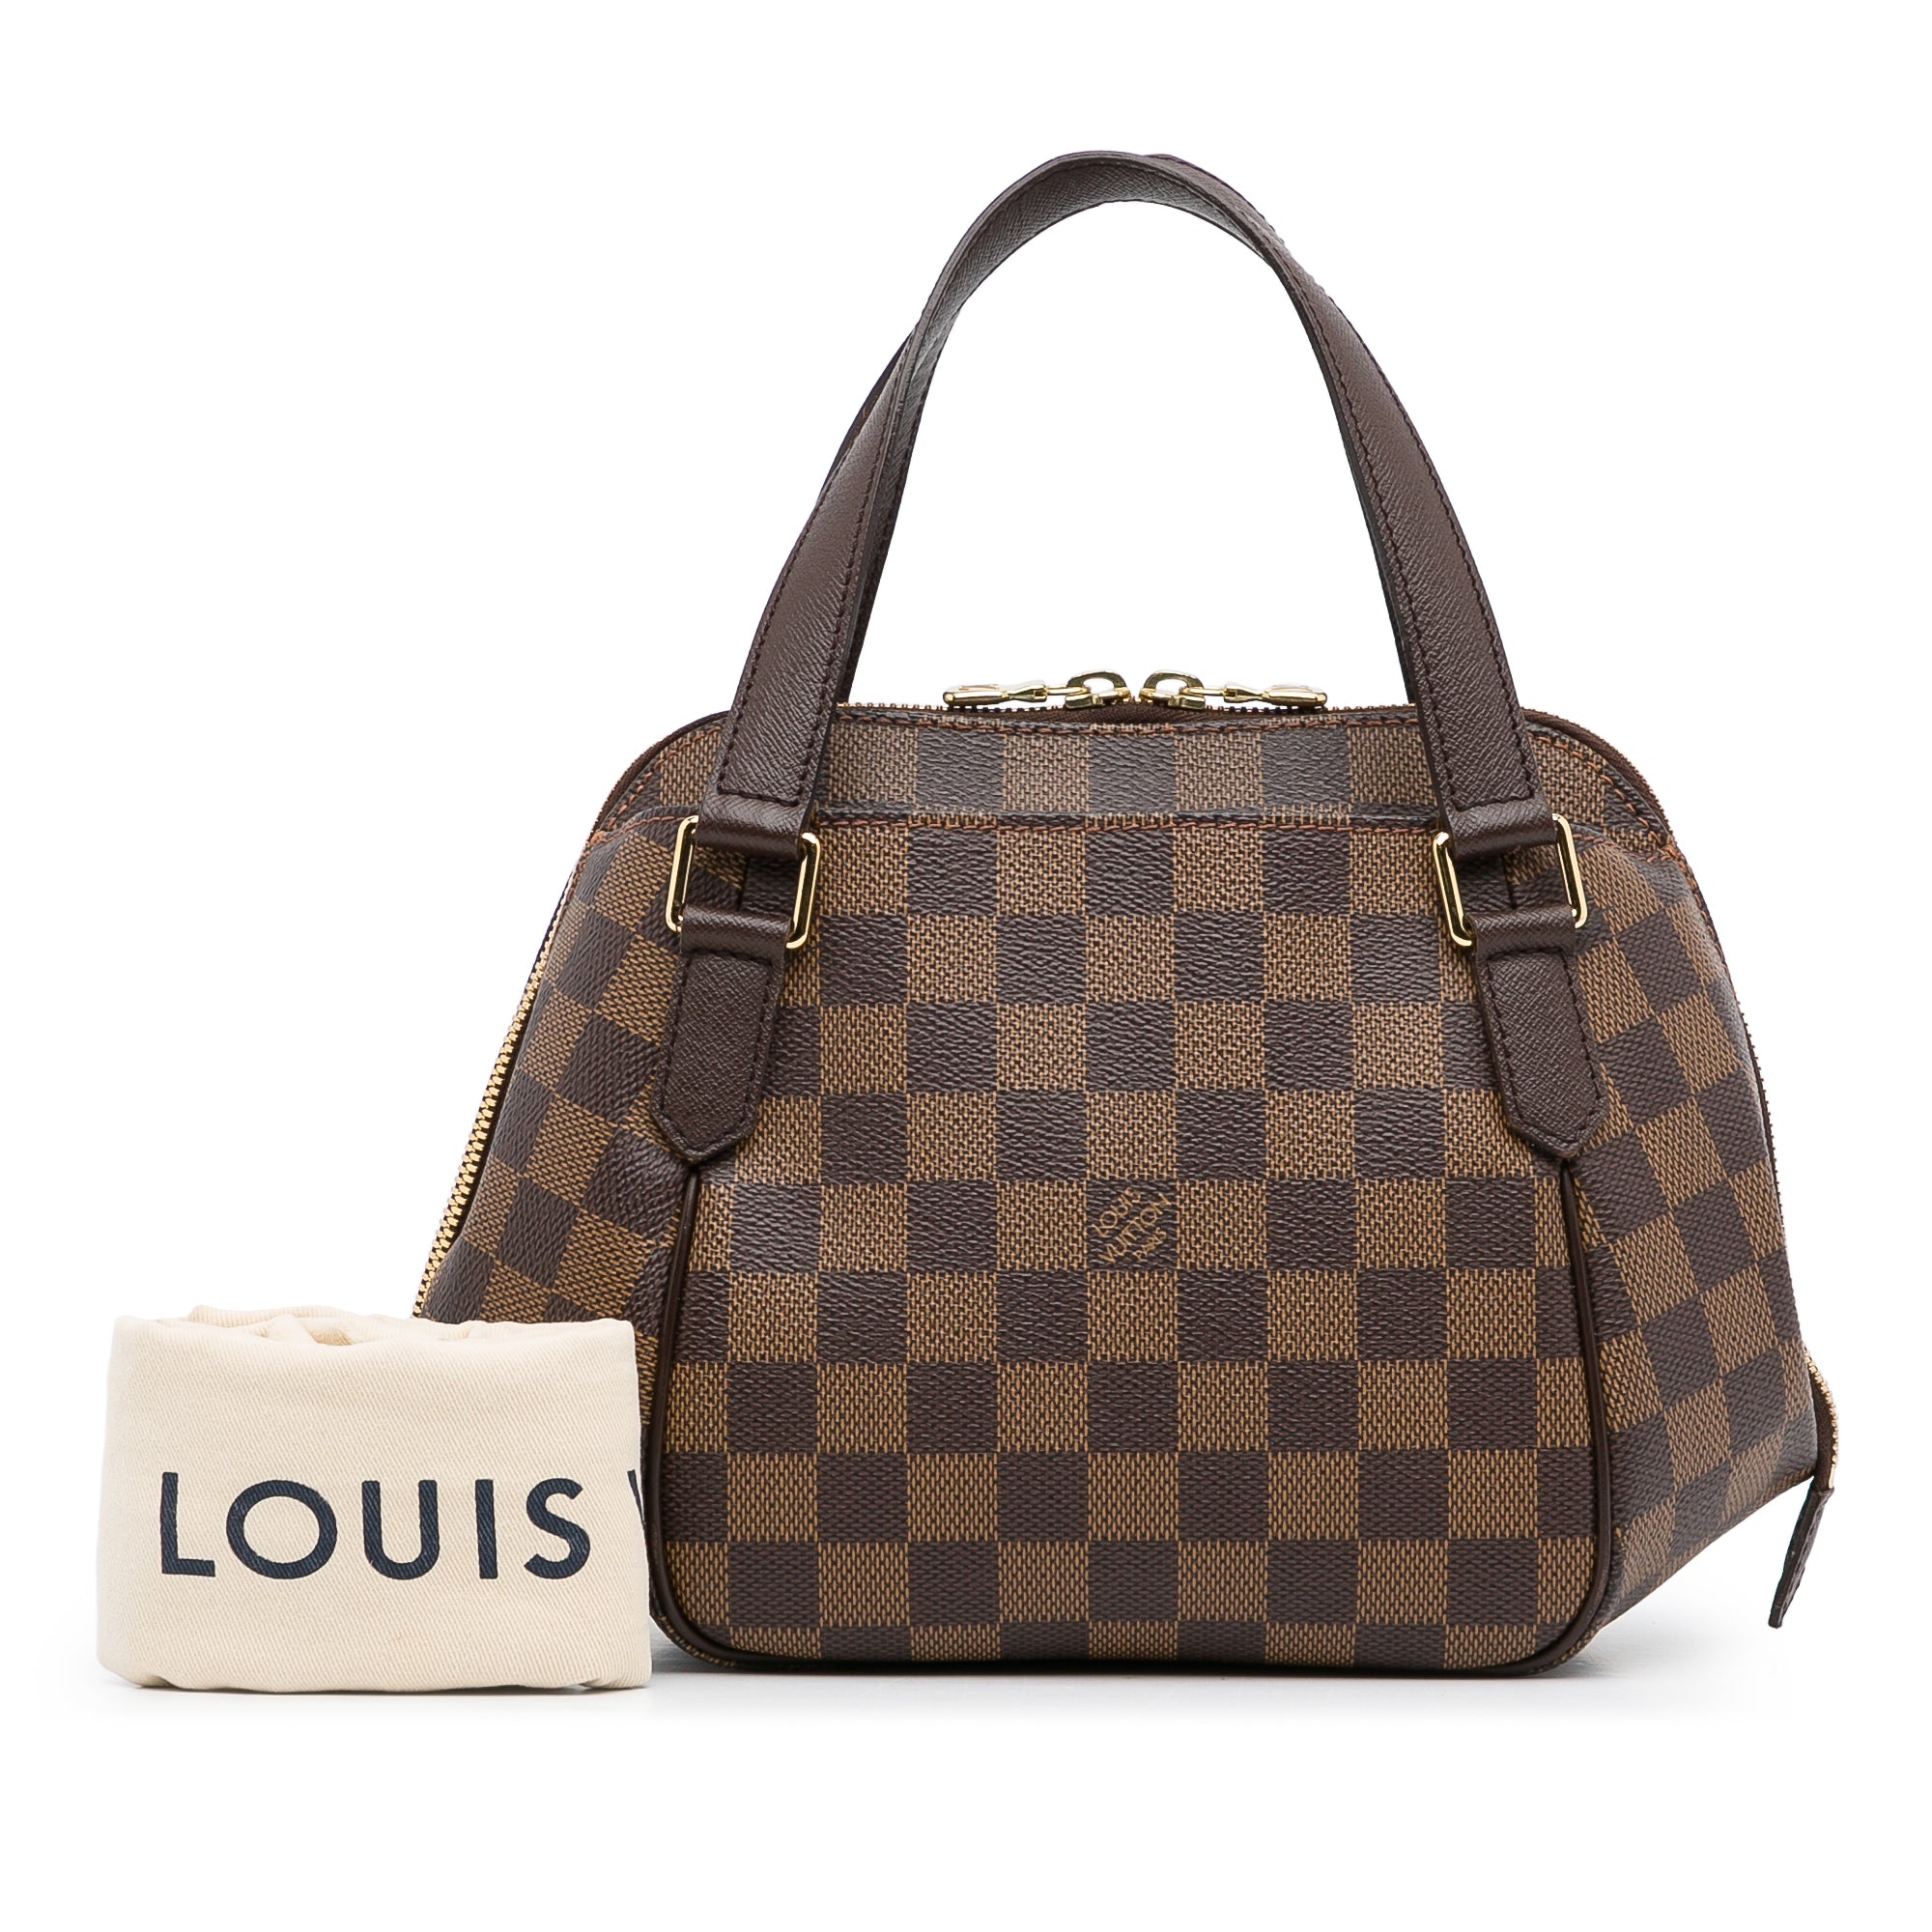 Louis Vuitton Belem Handbag Damier PM